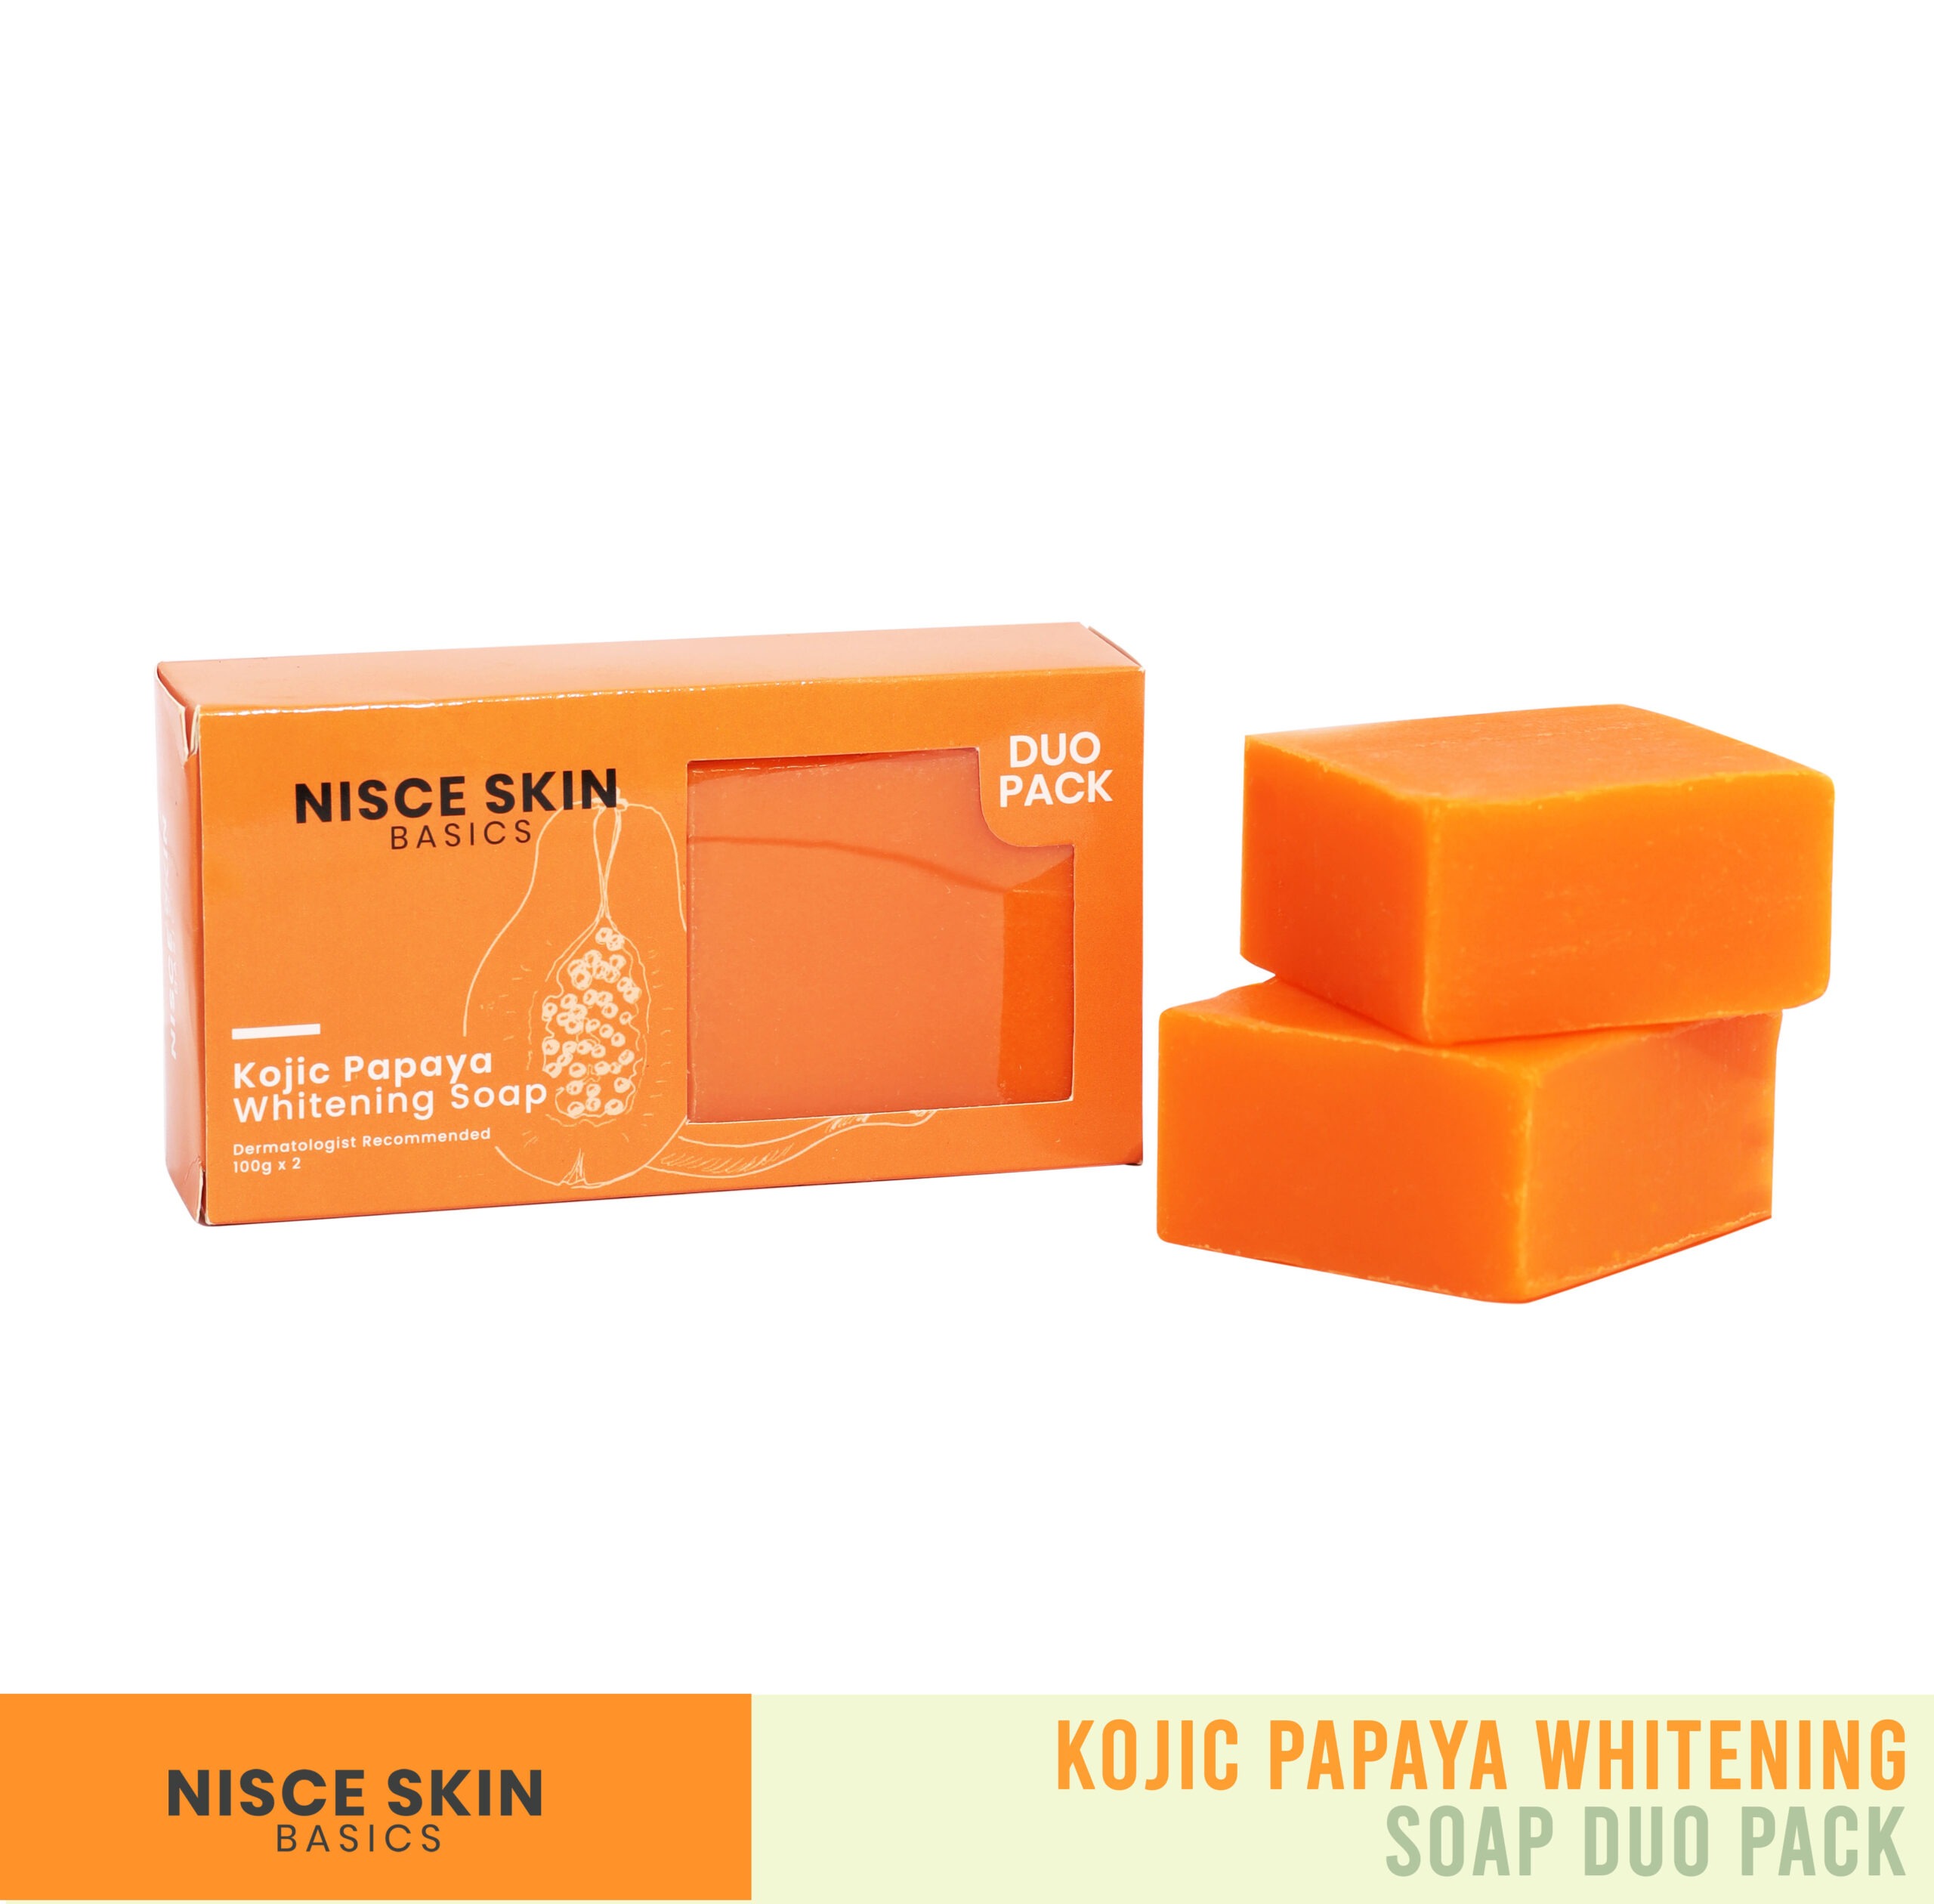 Nisce Skin Basics Kojic Papaya Whitening Soap Duo Pack Nisce